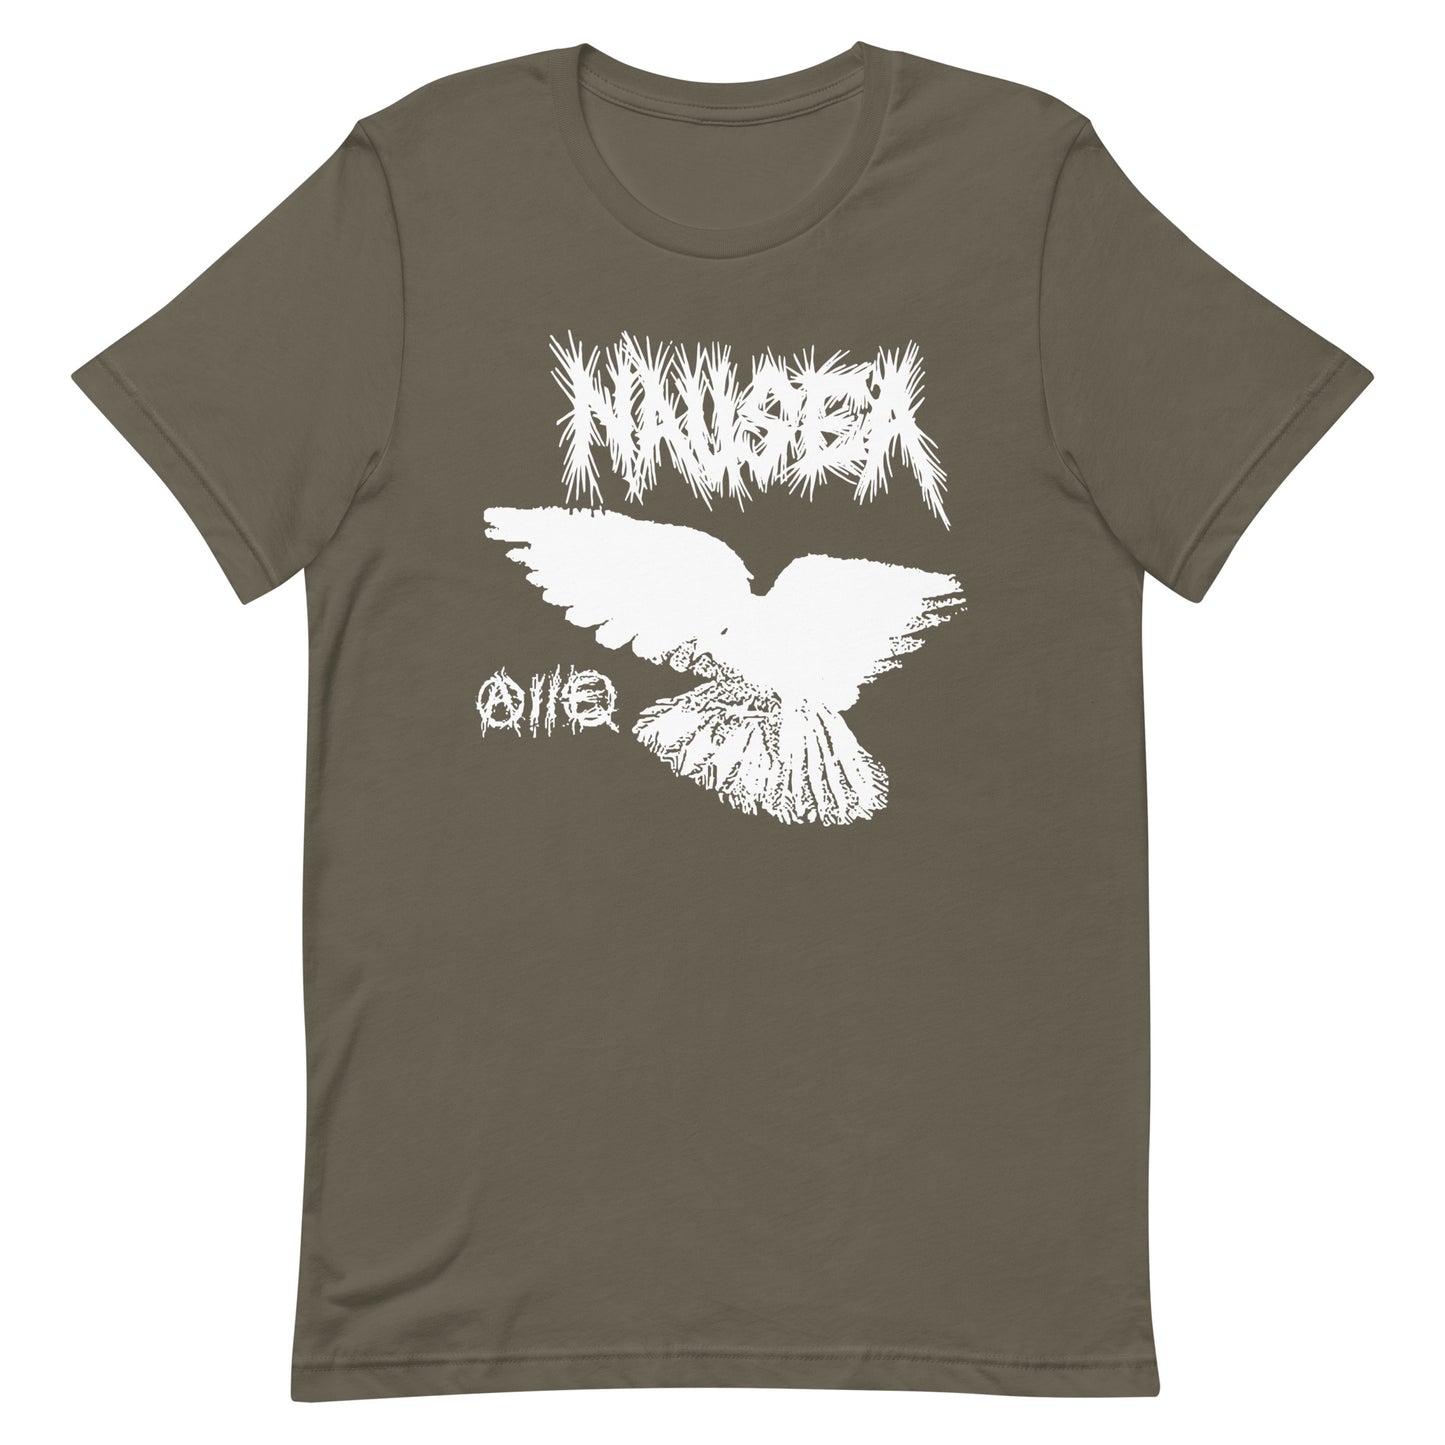 Nausea - A/E T-Shirt